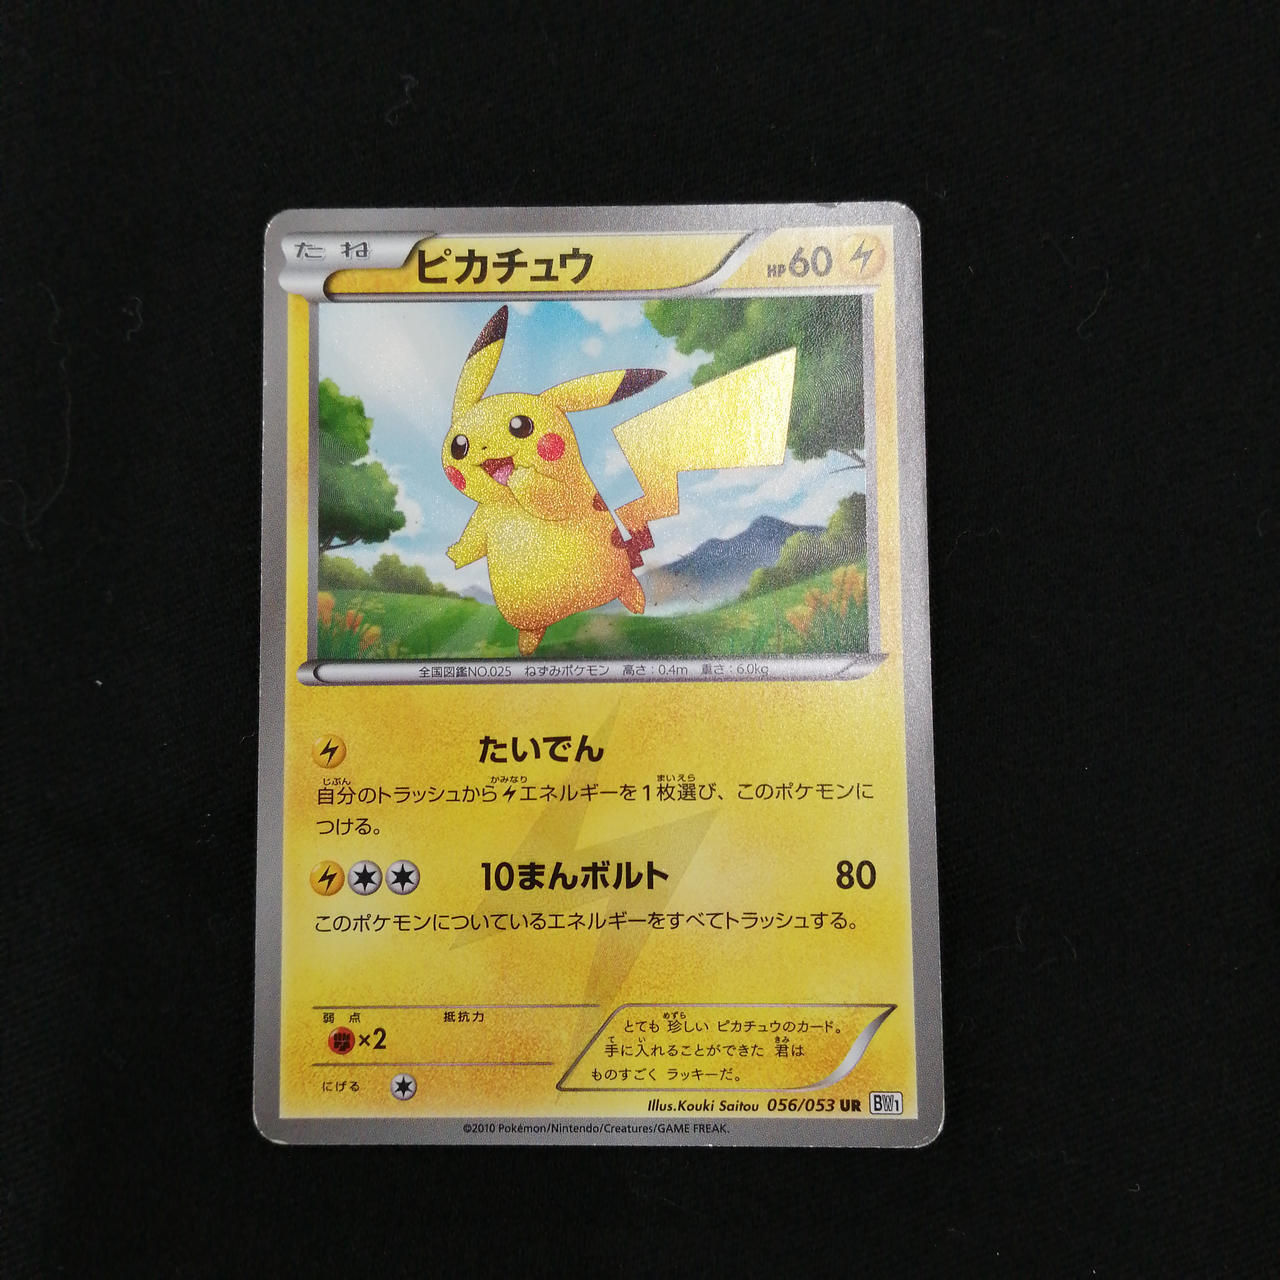 21-40 Pemon Co., Ltd. Pikachu 056/053 Ur Card